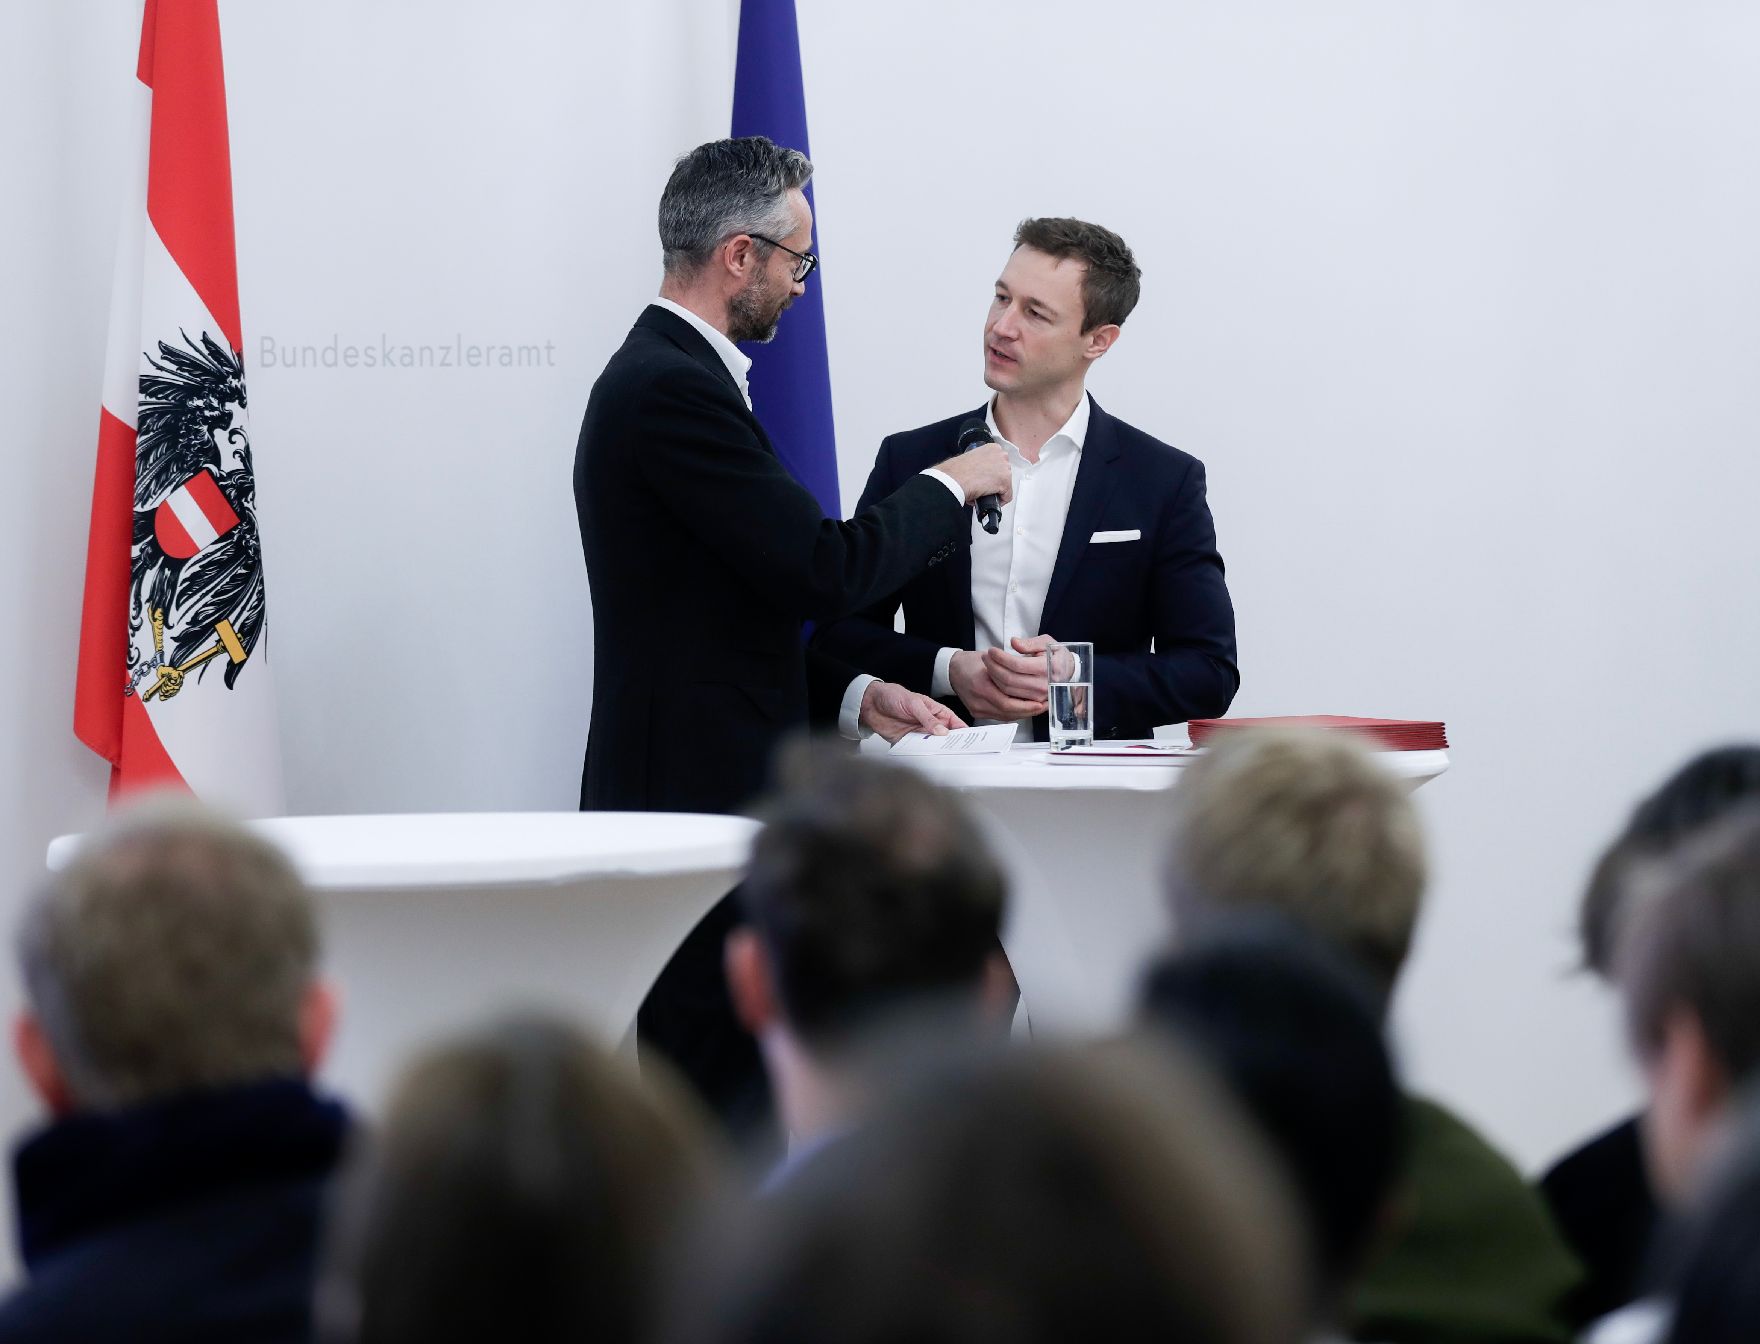 Am 29. November 2018 nahm Bundesminister Gernot Blümel (r.) an der Verleihung der "outstanding artist awards" im Bundeskanzleramt teil.